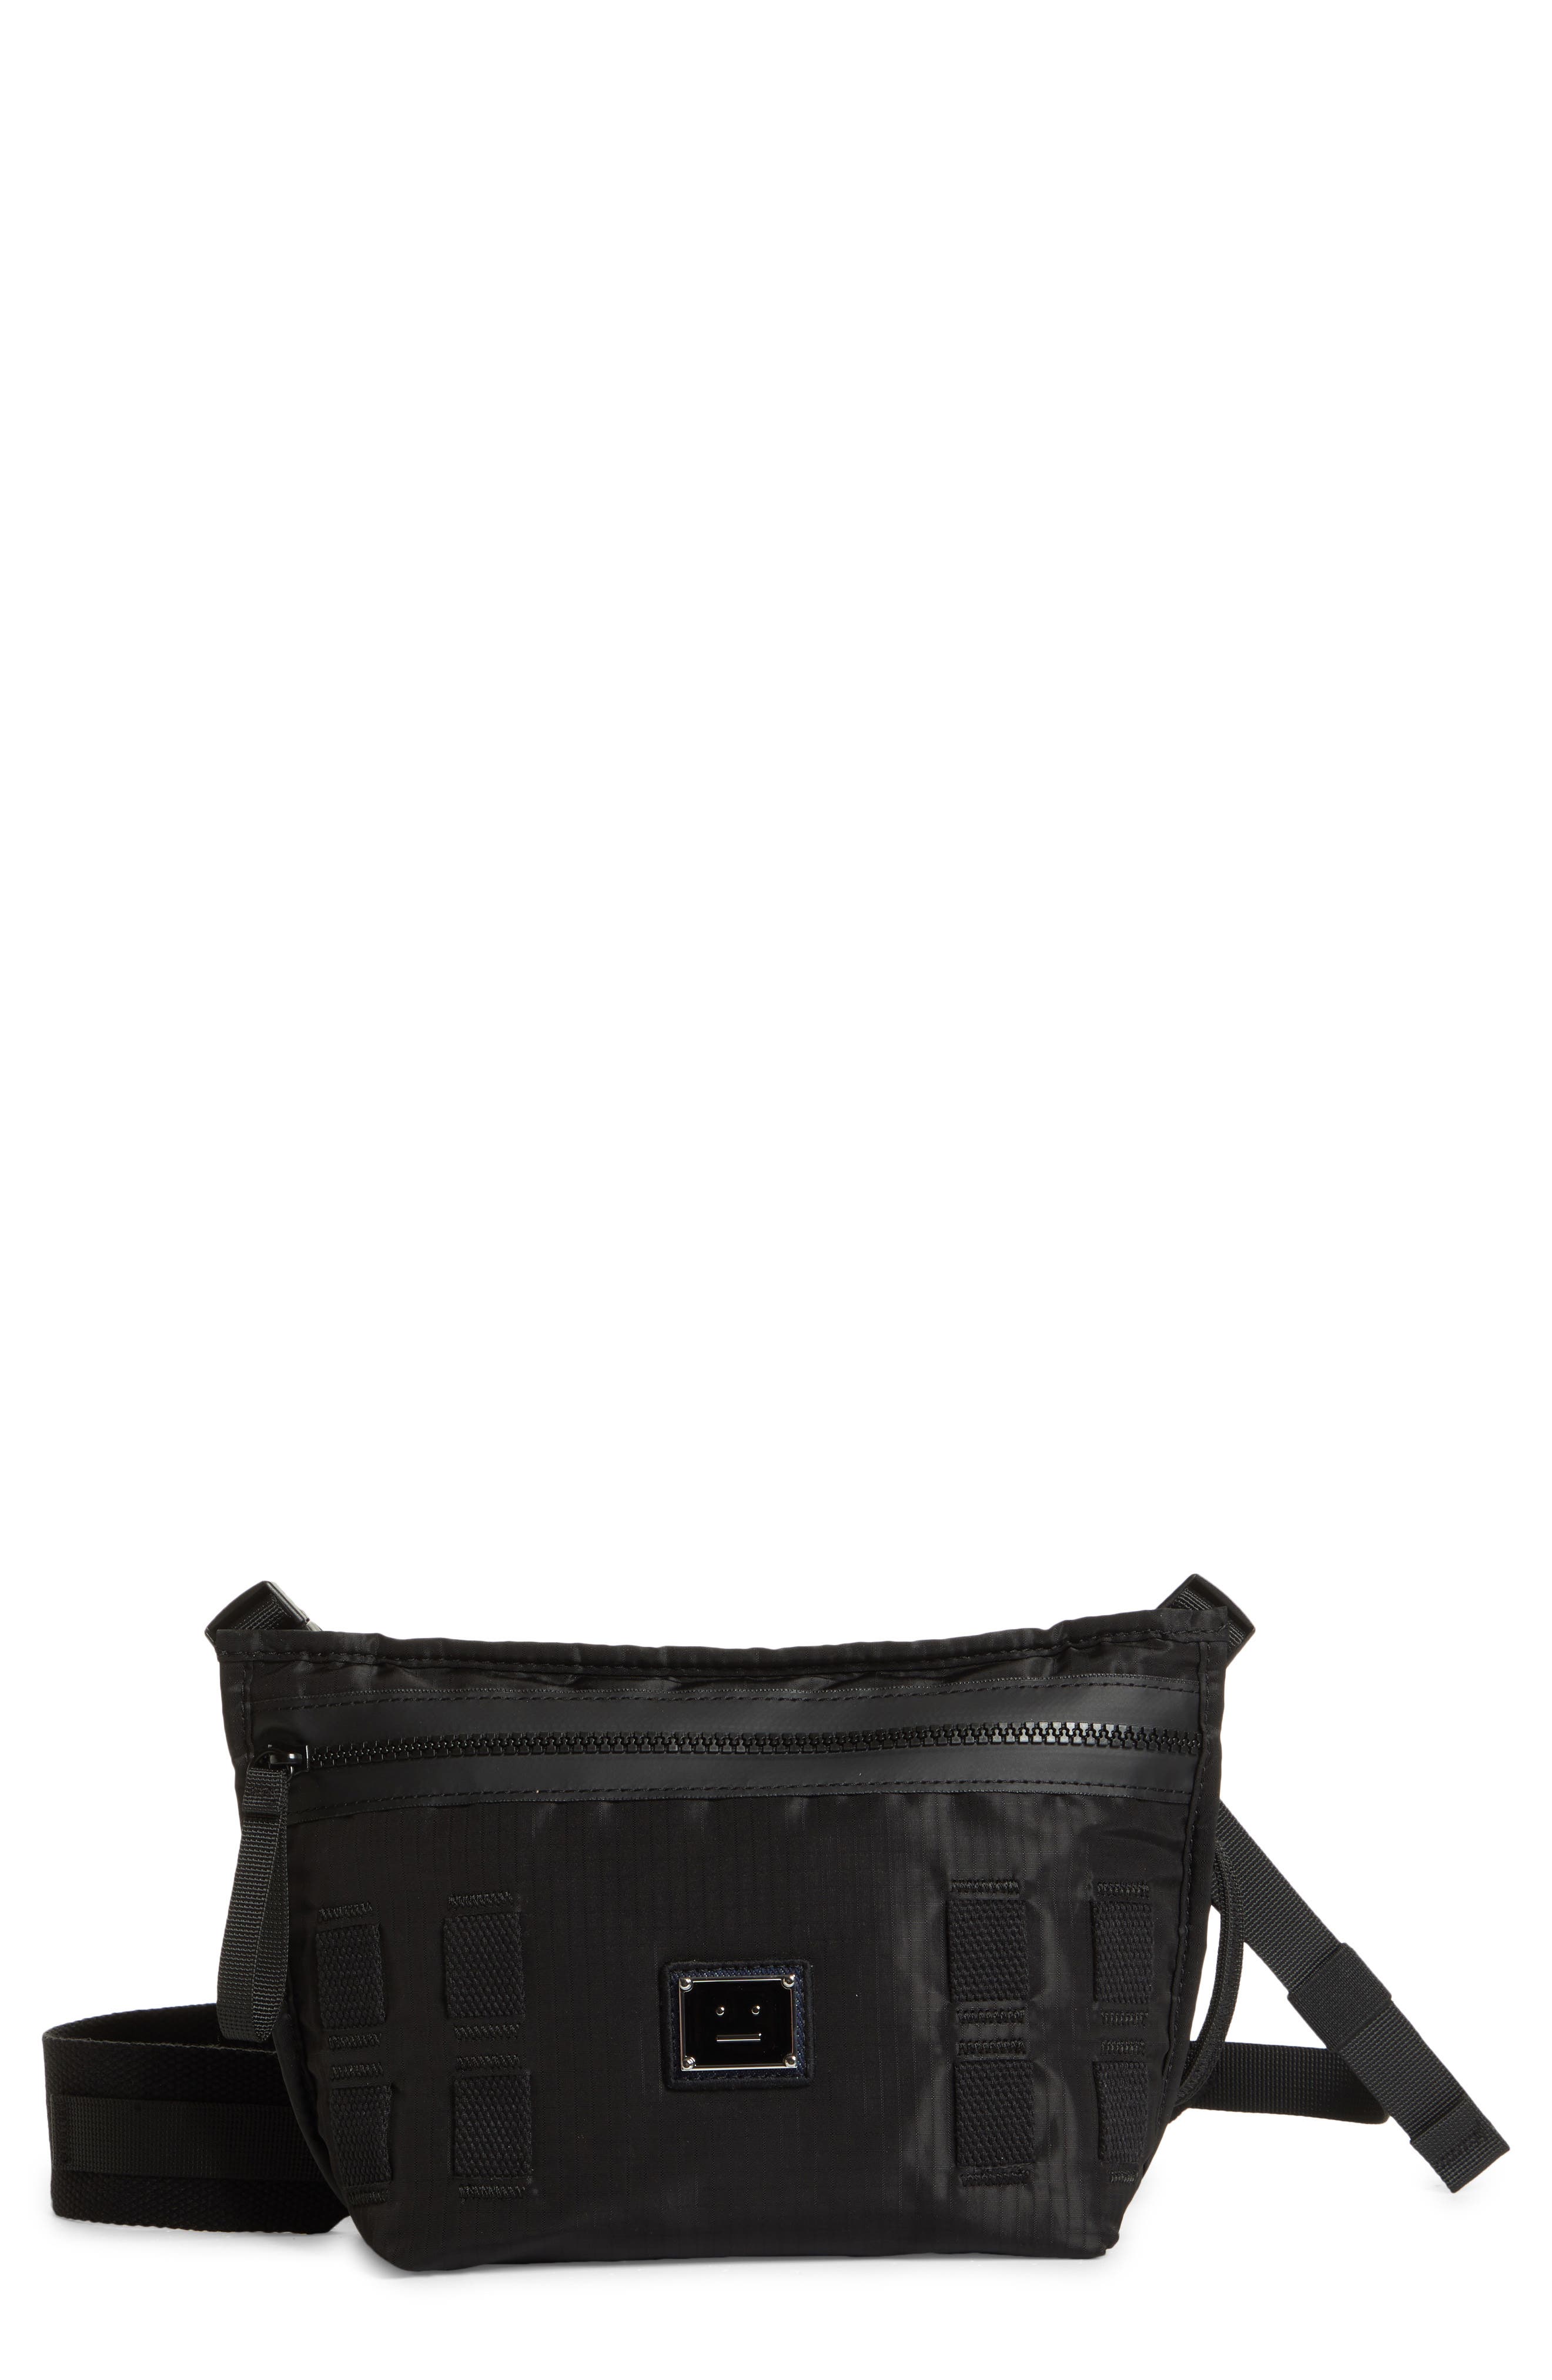 Acne Studios Agios Face Plaque Crossbody Bag in Black at Nordstrom